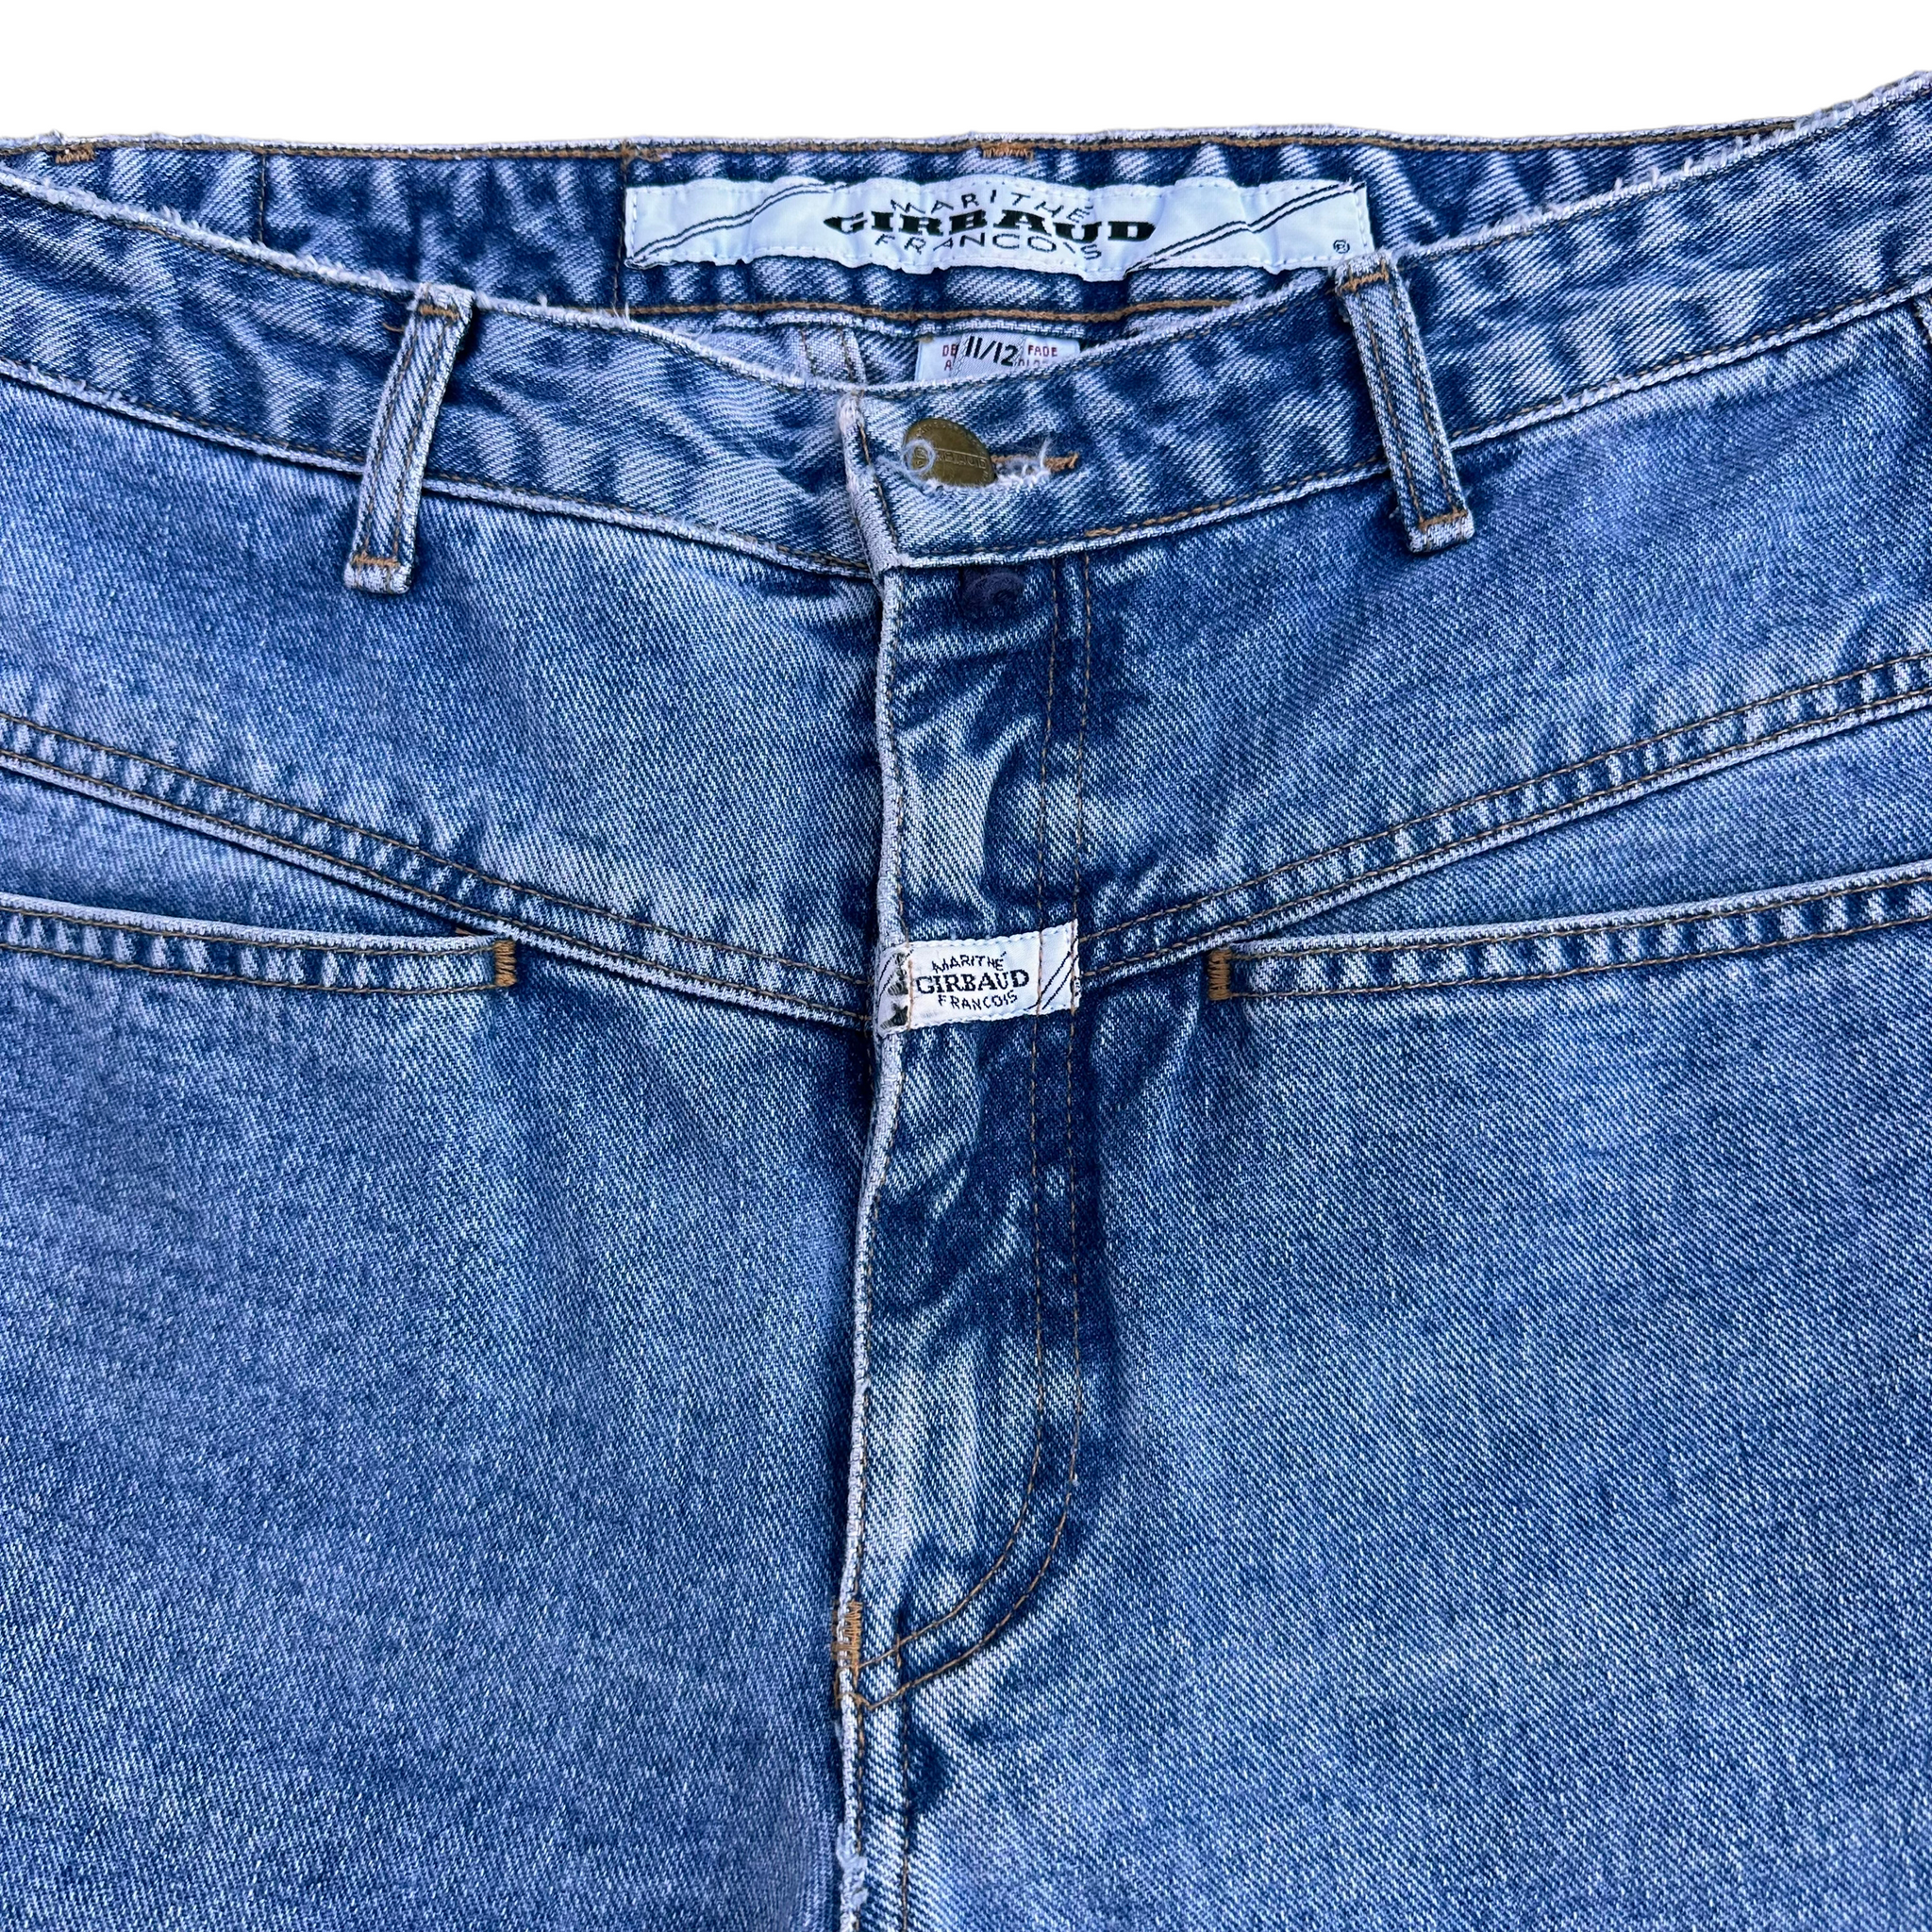 Girbaud women’s jeans 32/24